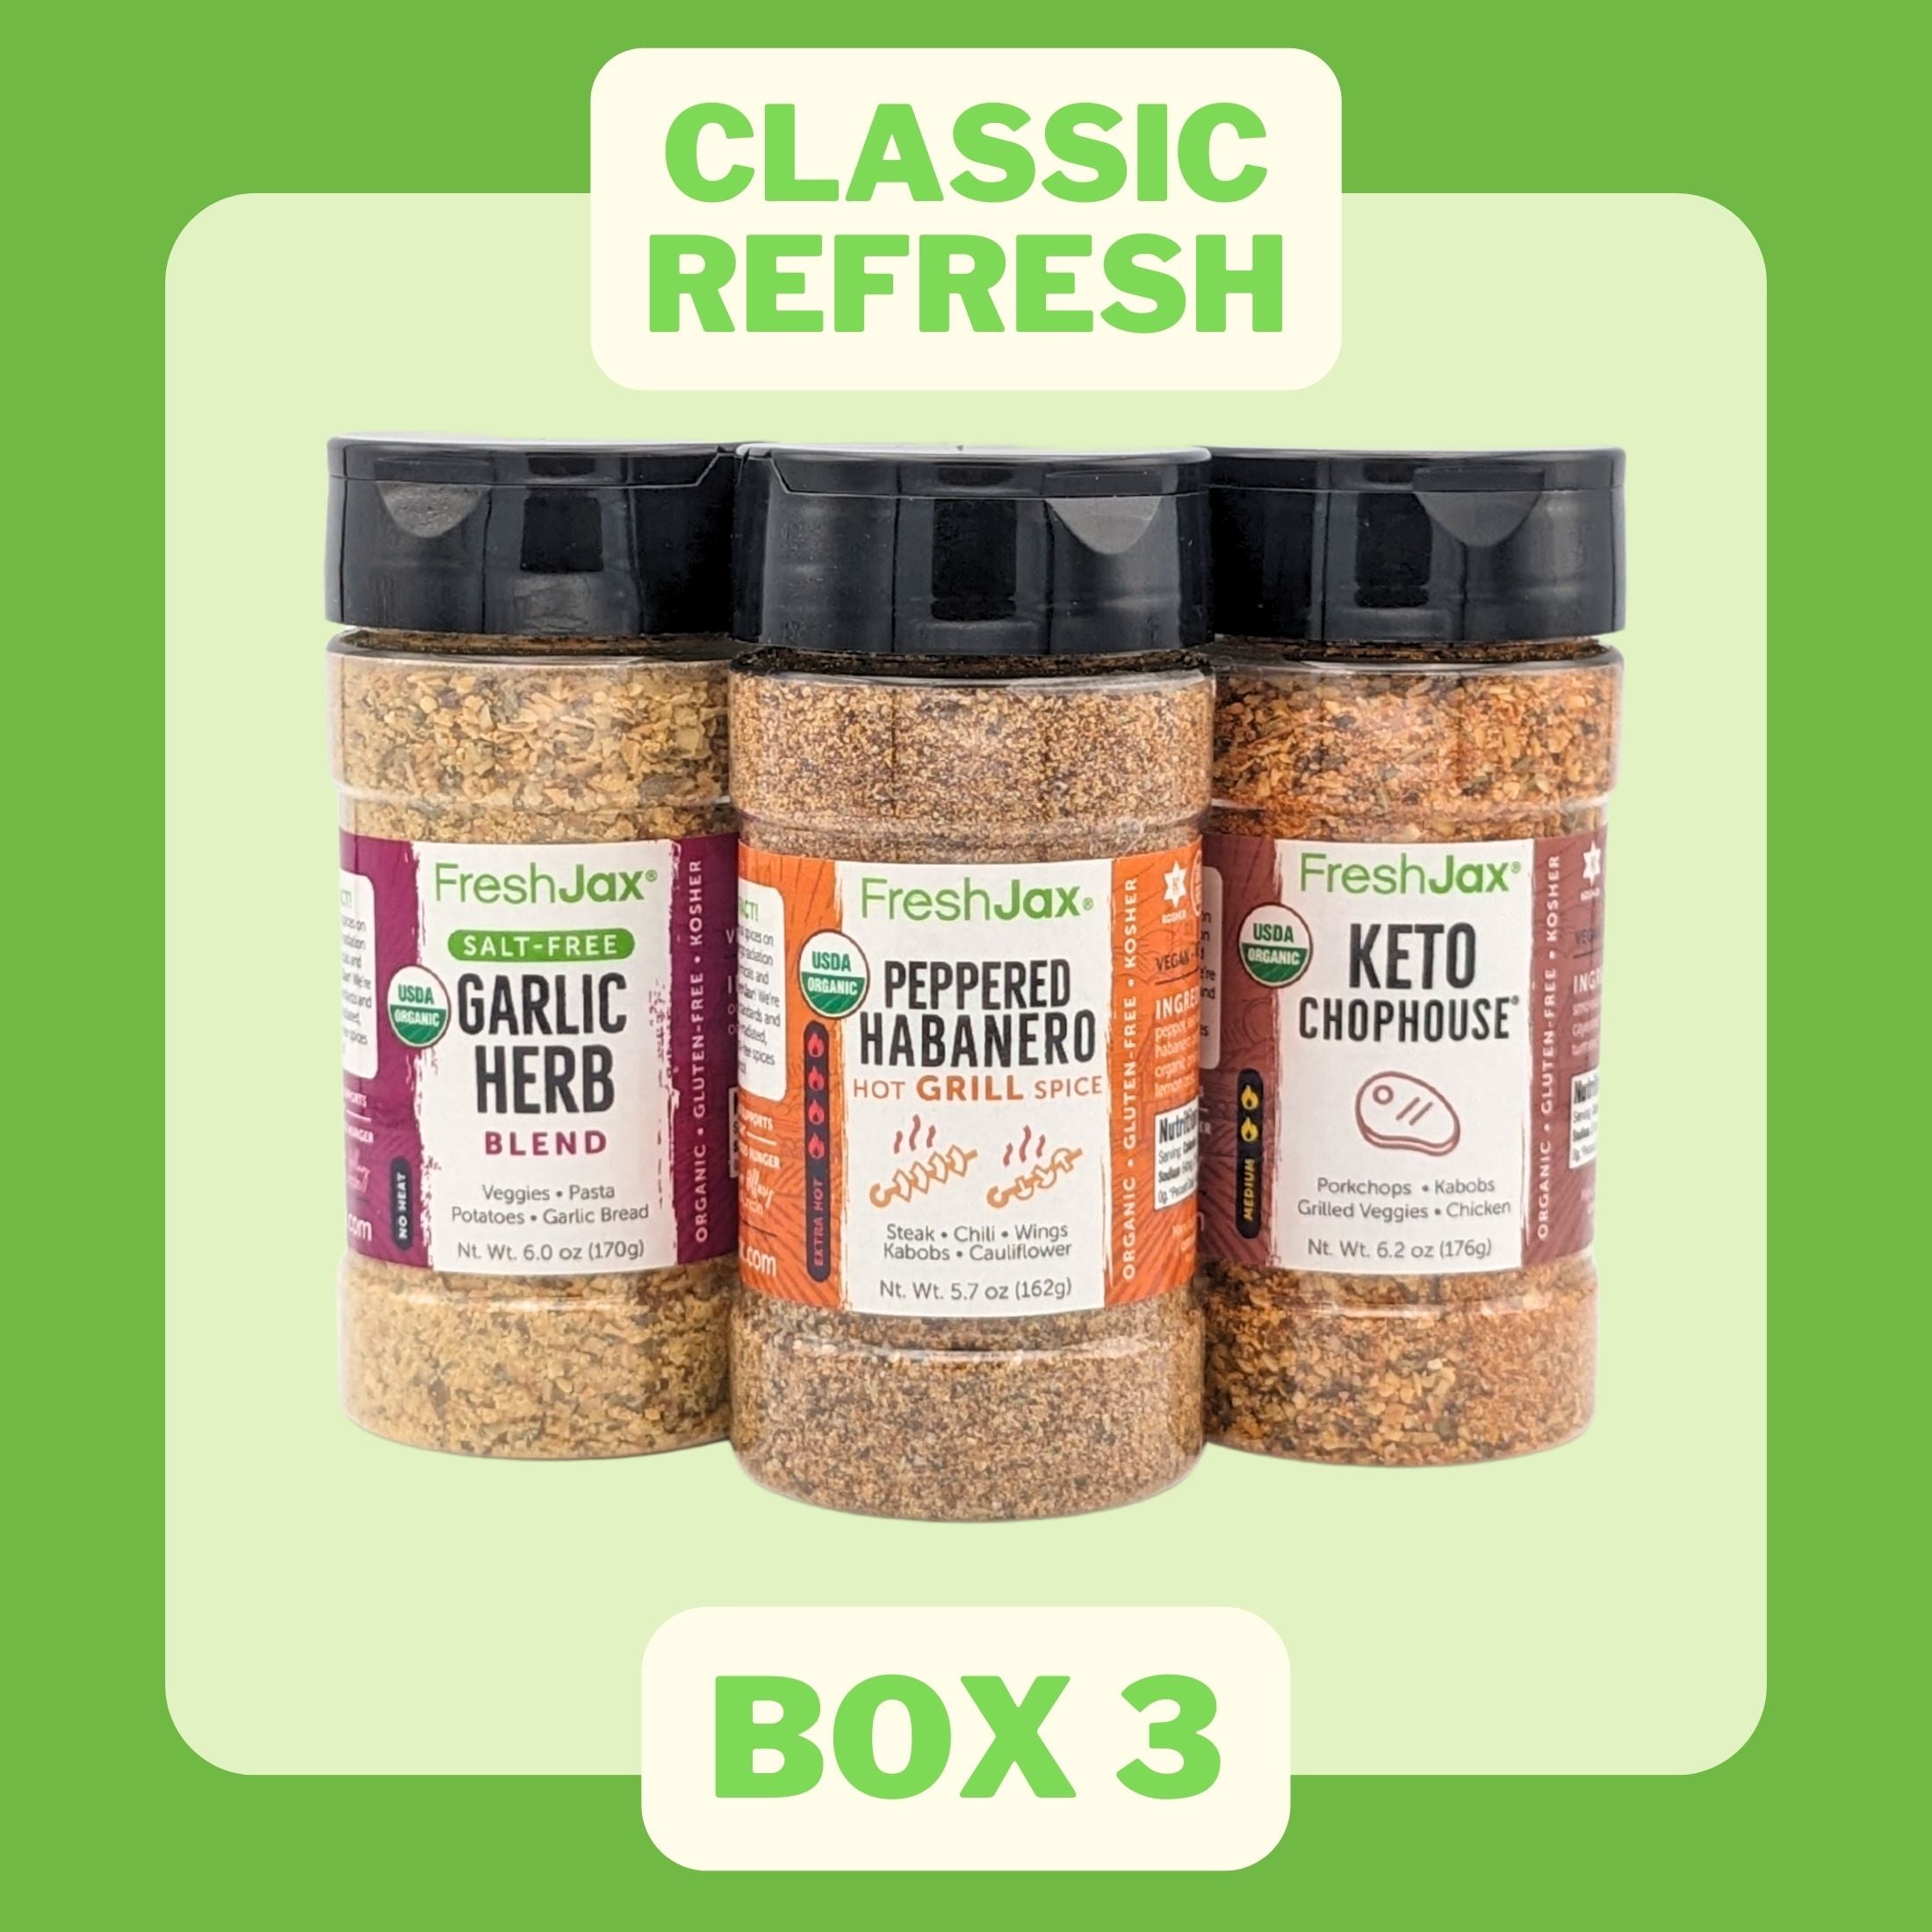 FreshJax Classic ReFresh - Box 3 : Garlic Herb Blend, Peppered Habanero, Keto Chophouse